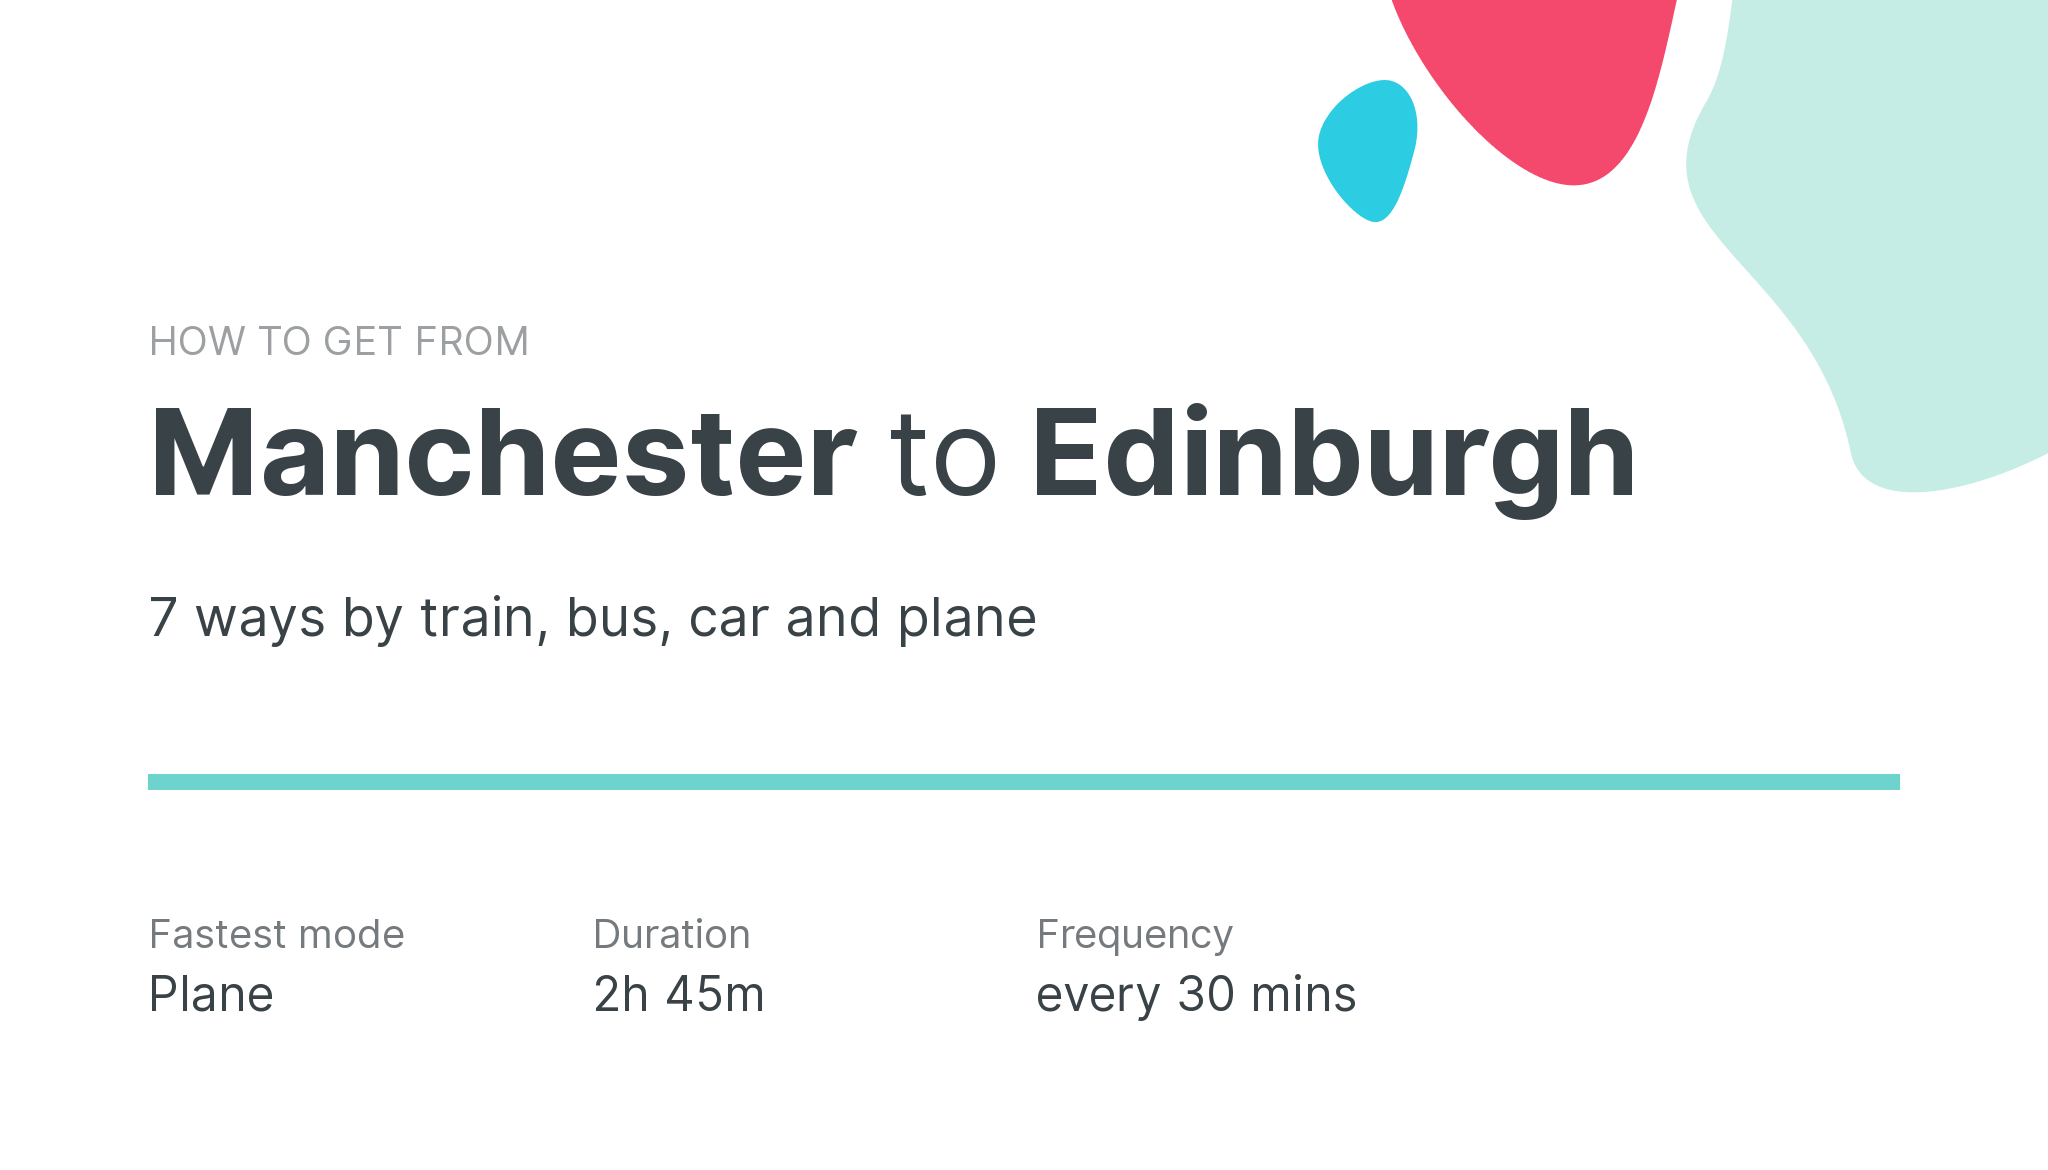 How do I get from Manchester to Edinburgh